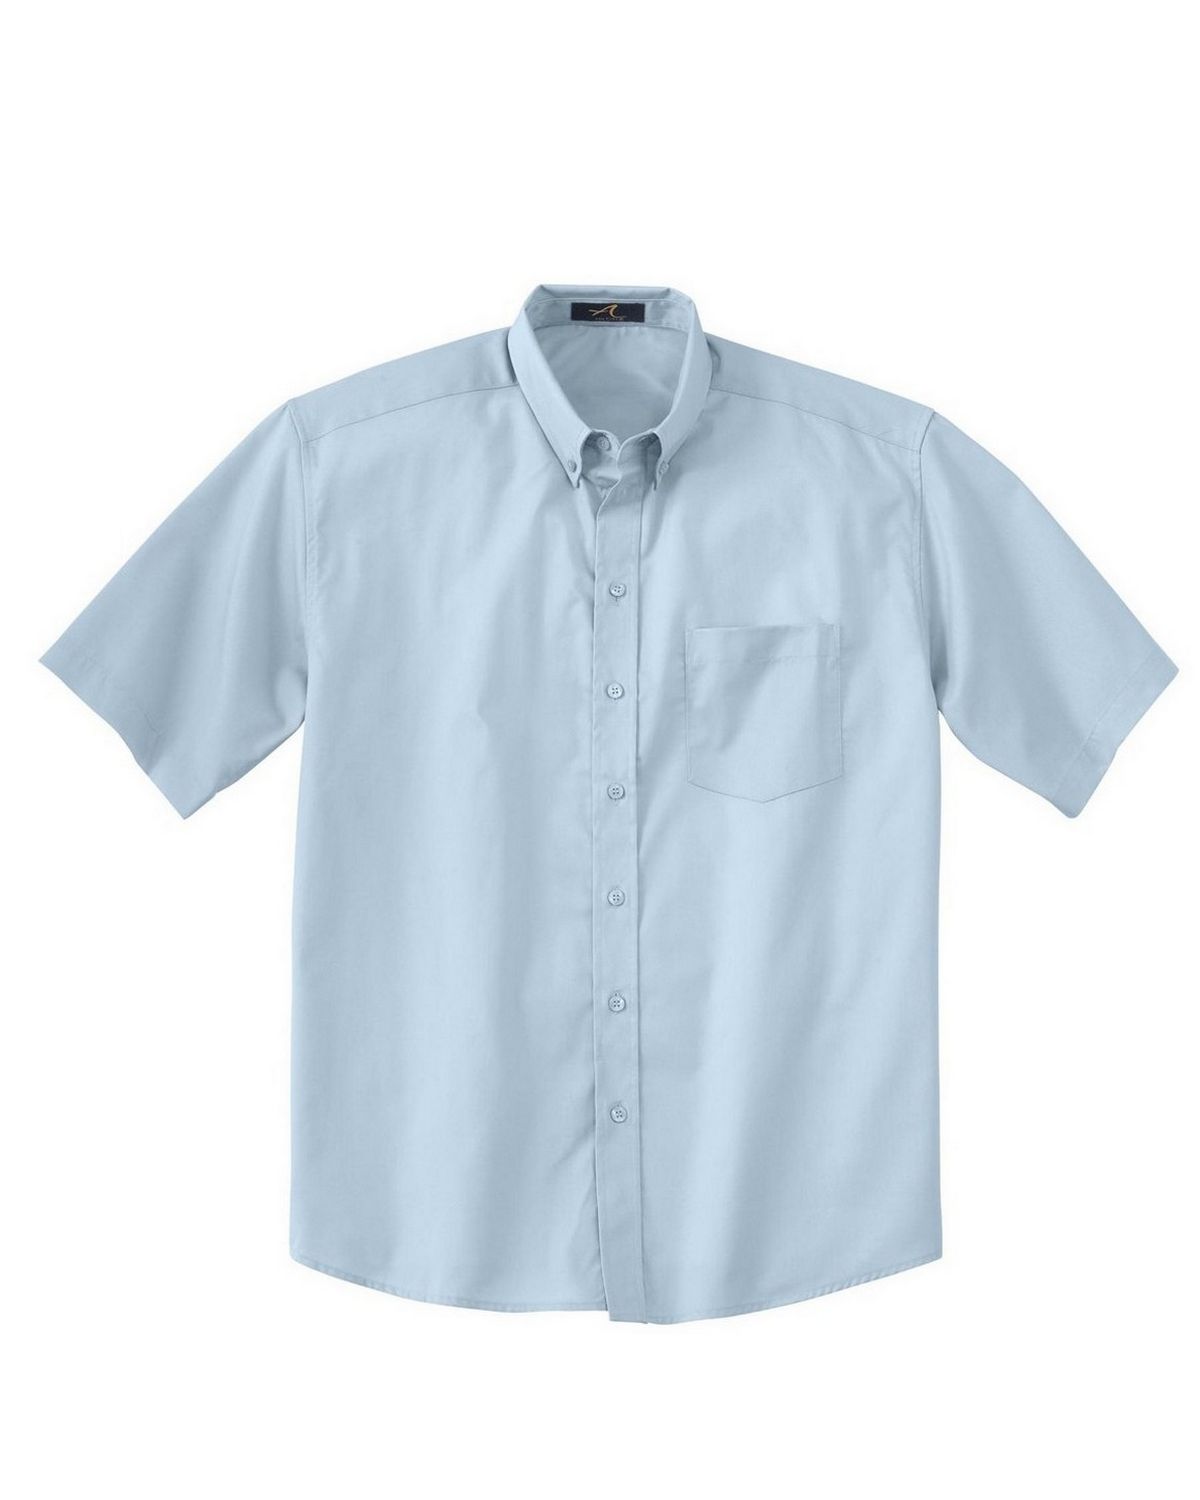 Ash City 87016 Men's Short Sleeve Twill Shirt